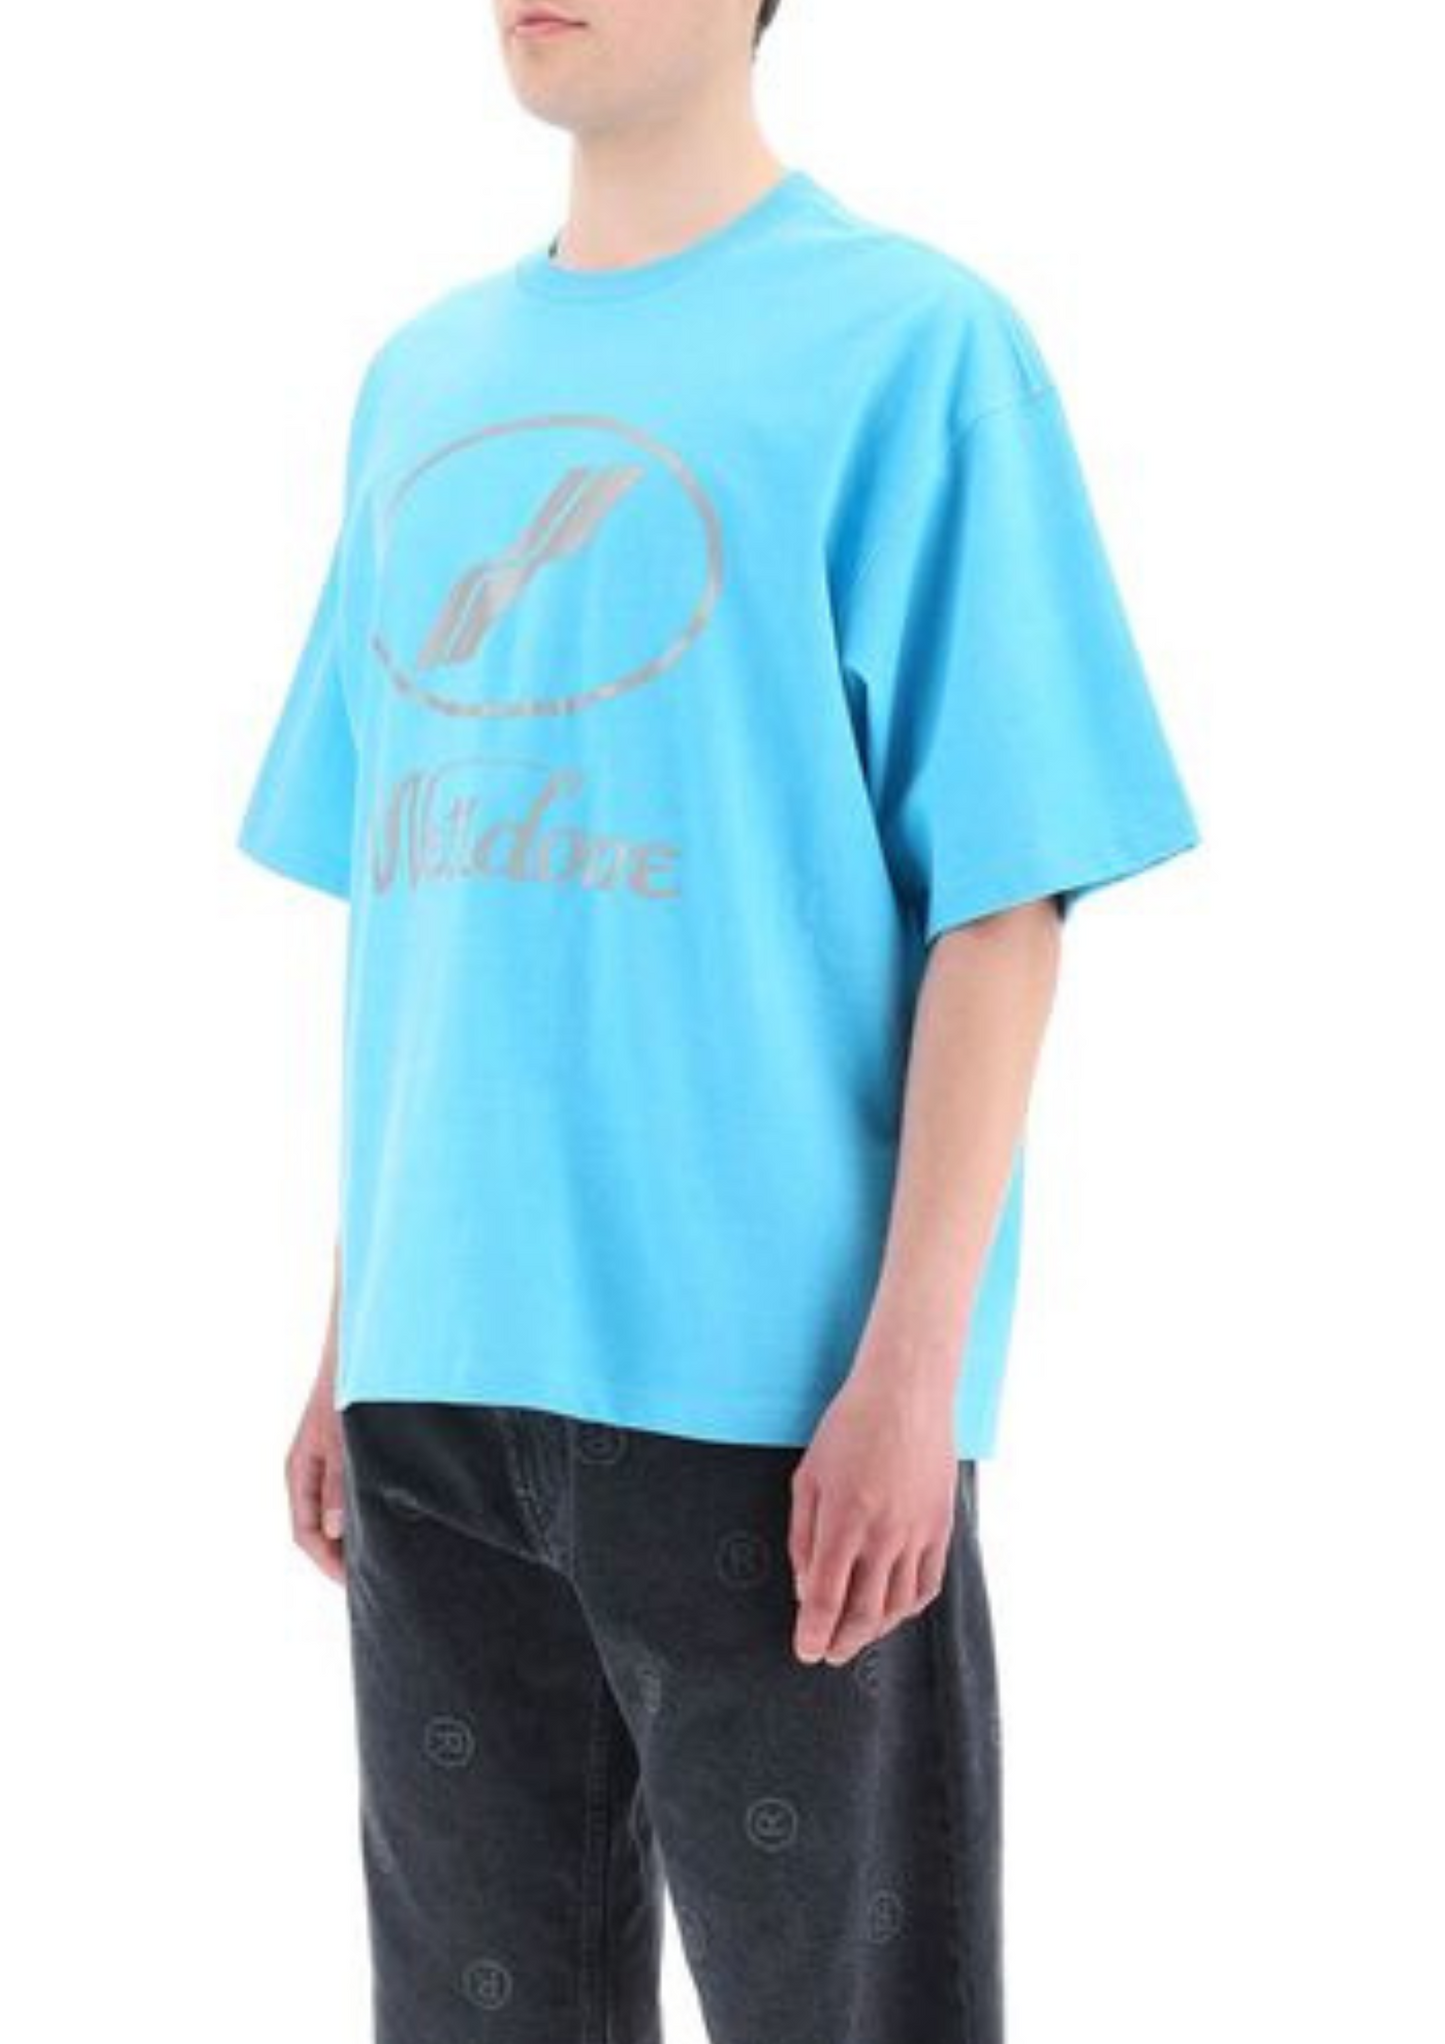 WE11DONE Logo Printed Oversized T-Shirt (Blue)